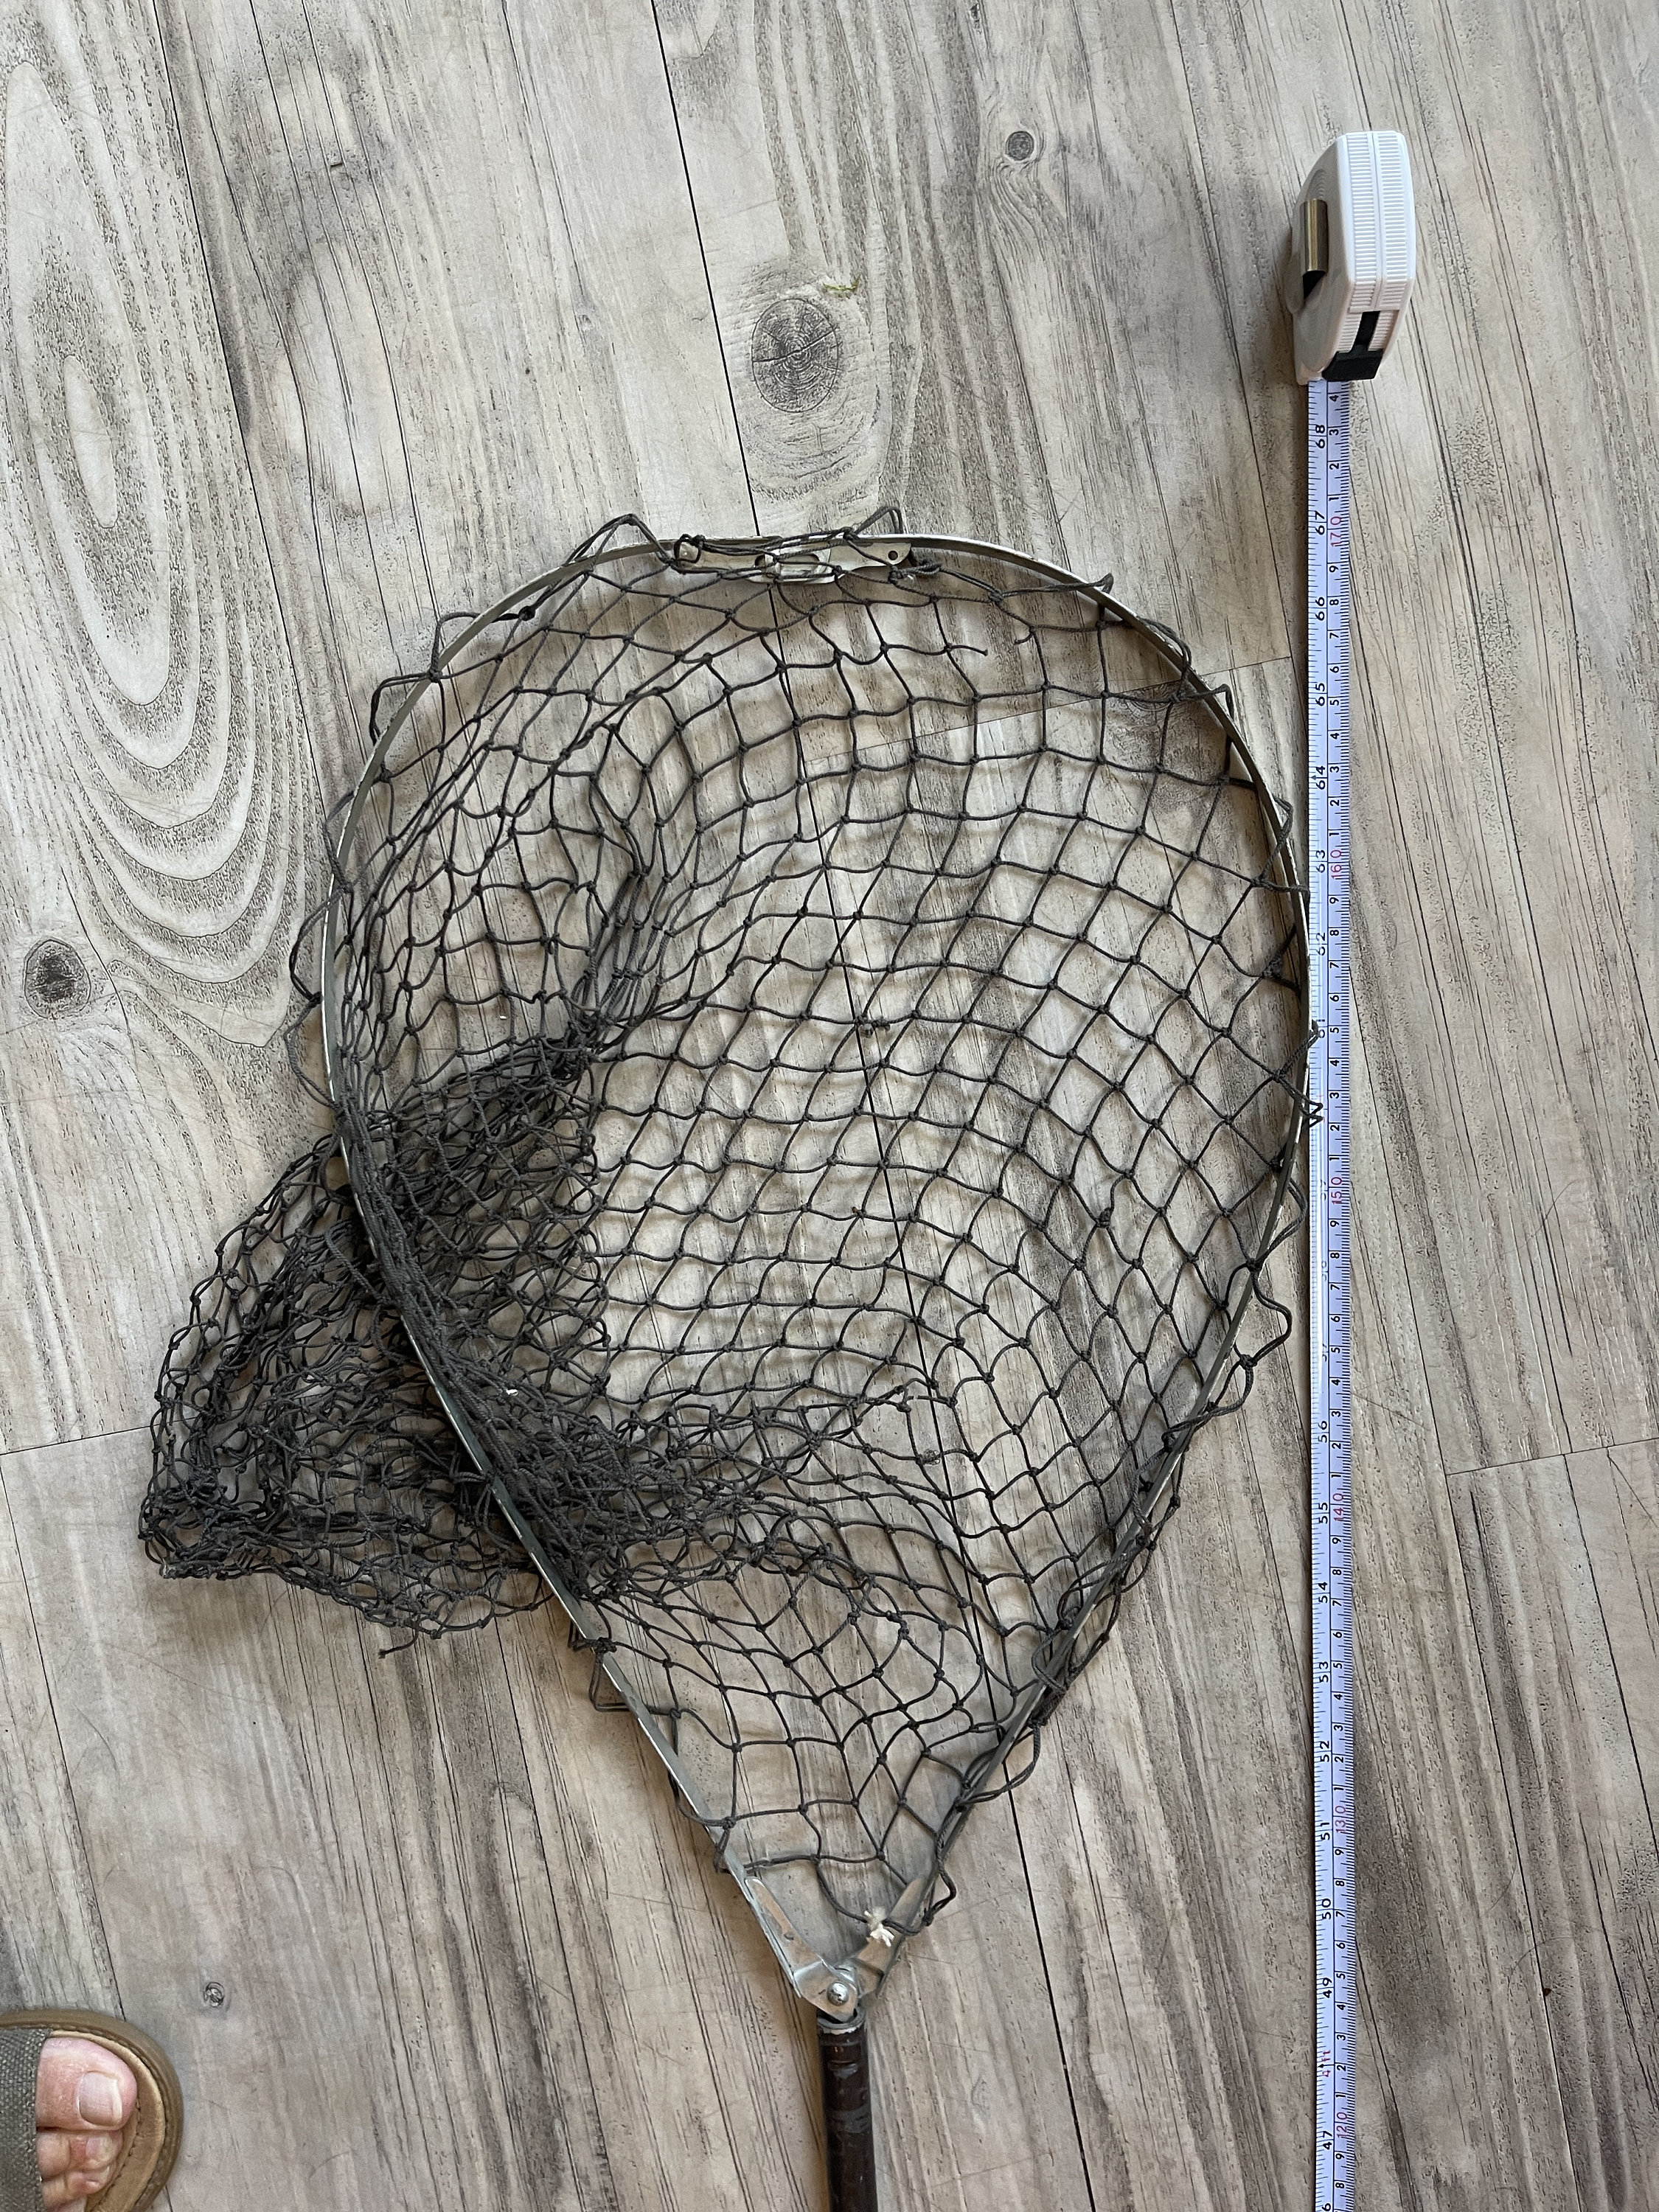 Fishing net - New World Encyclopedia